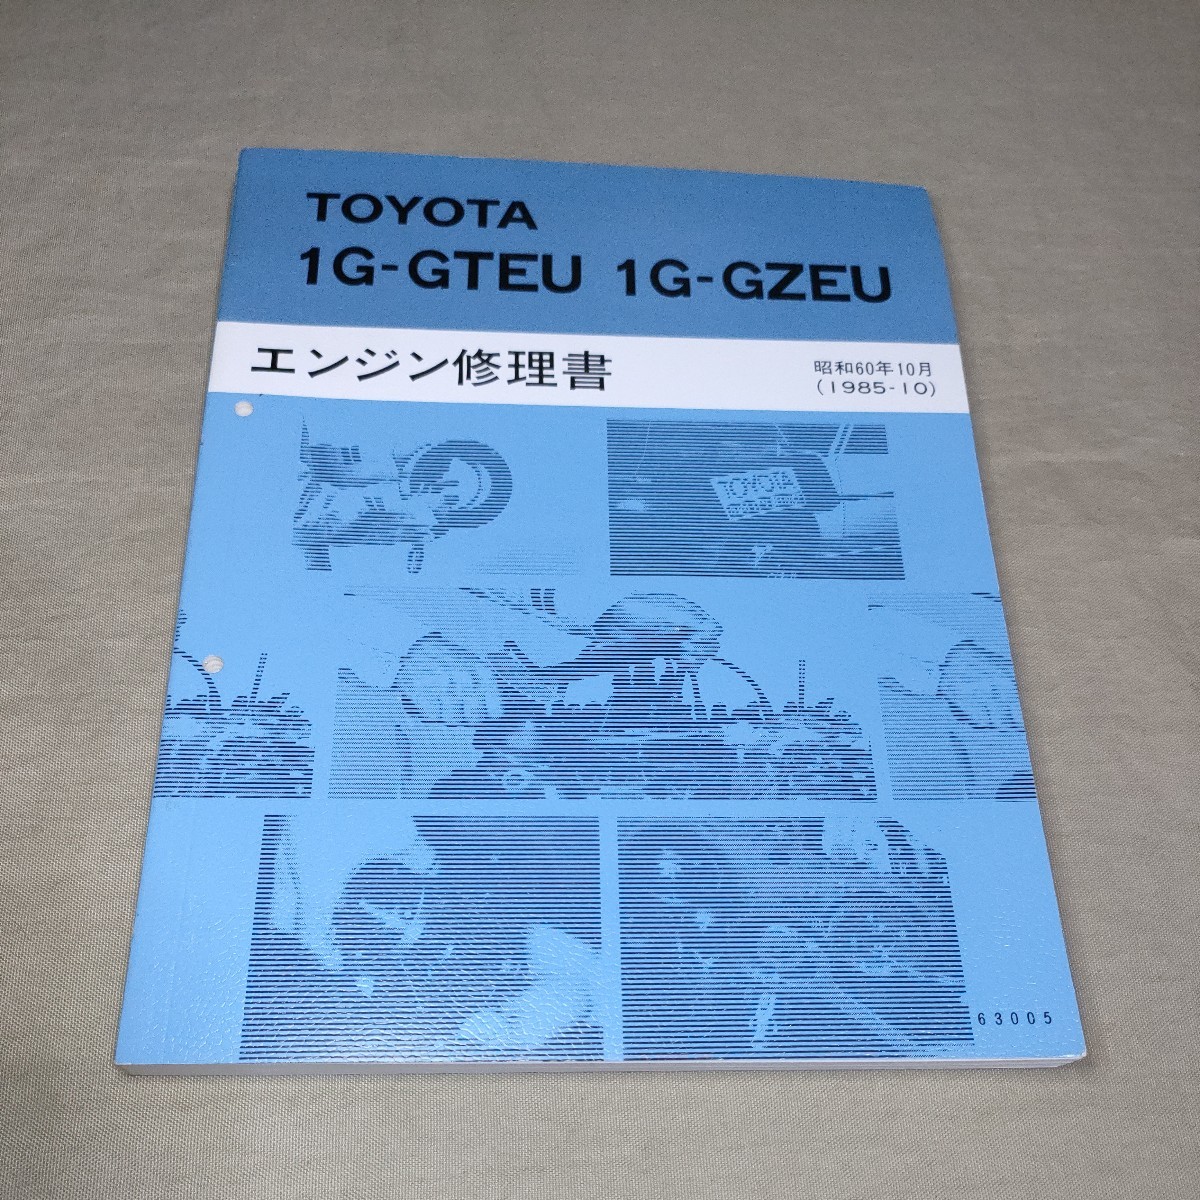  Toyota двигатель книга по ремонту 1G-GTEU 1G-GZEU 1985-10 Crown / Mark Ⅱ/ Chaser / Cresta GS120/GX71/GX77 Showa 60 год 